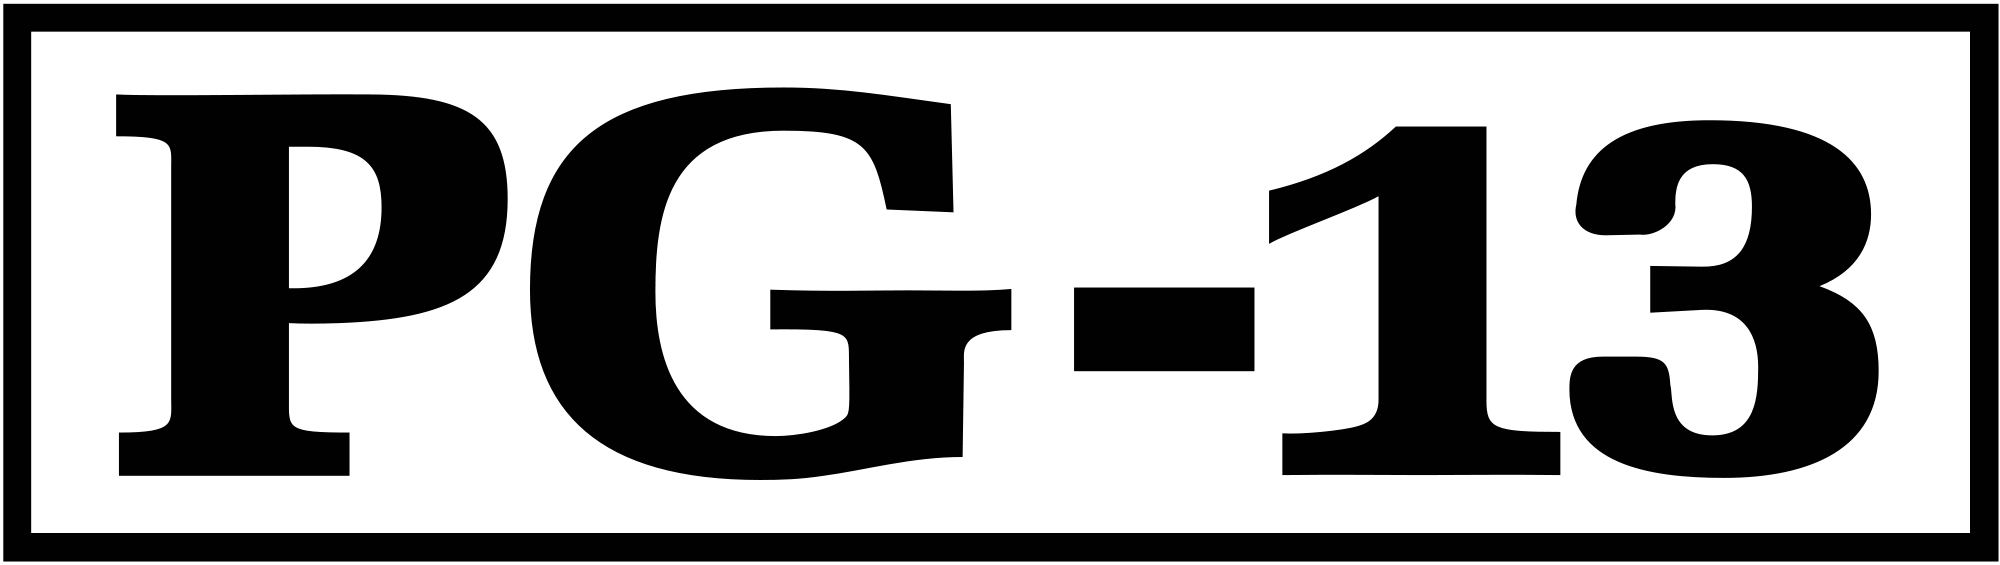 PG-13 Logo - Rated pg 13 Logos